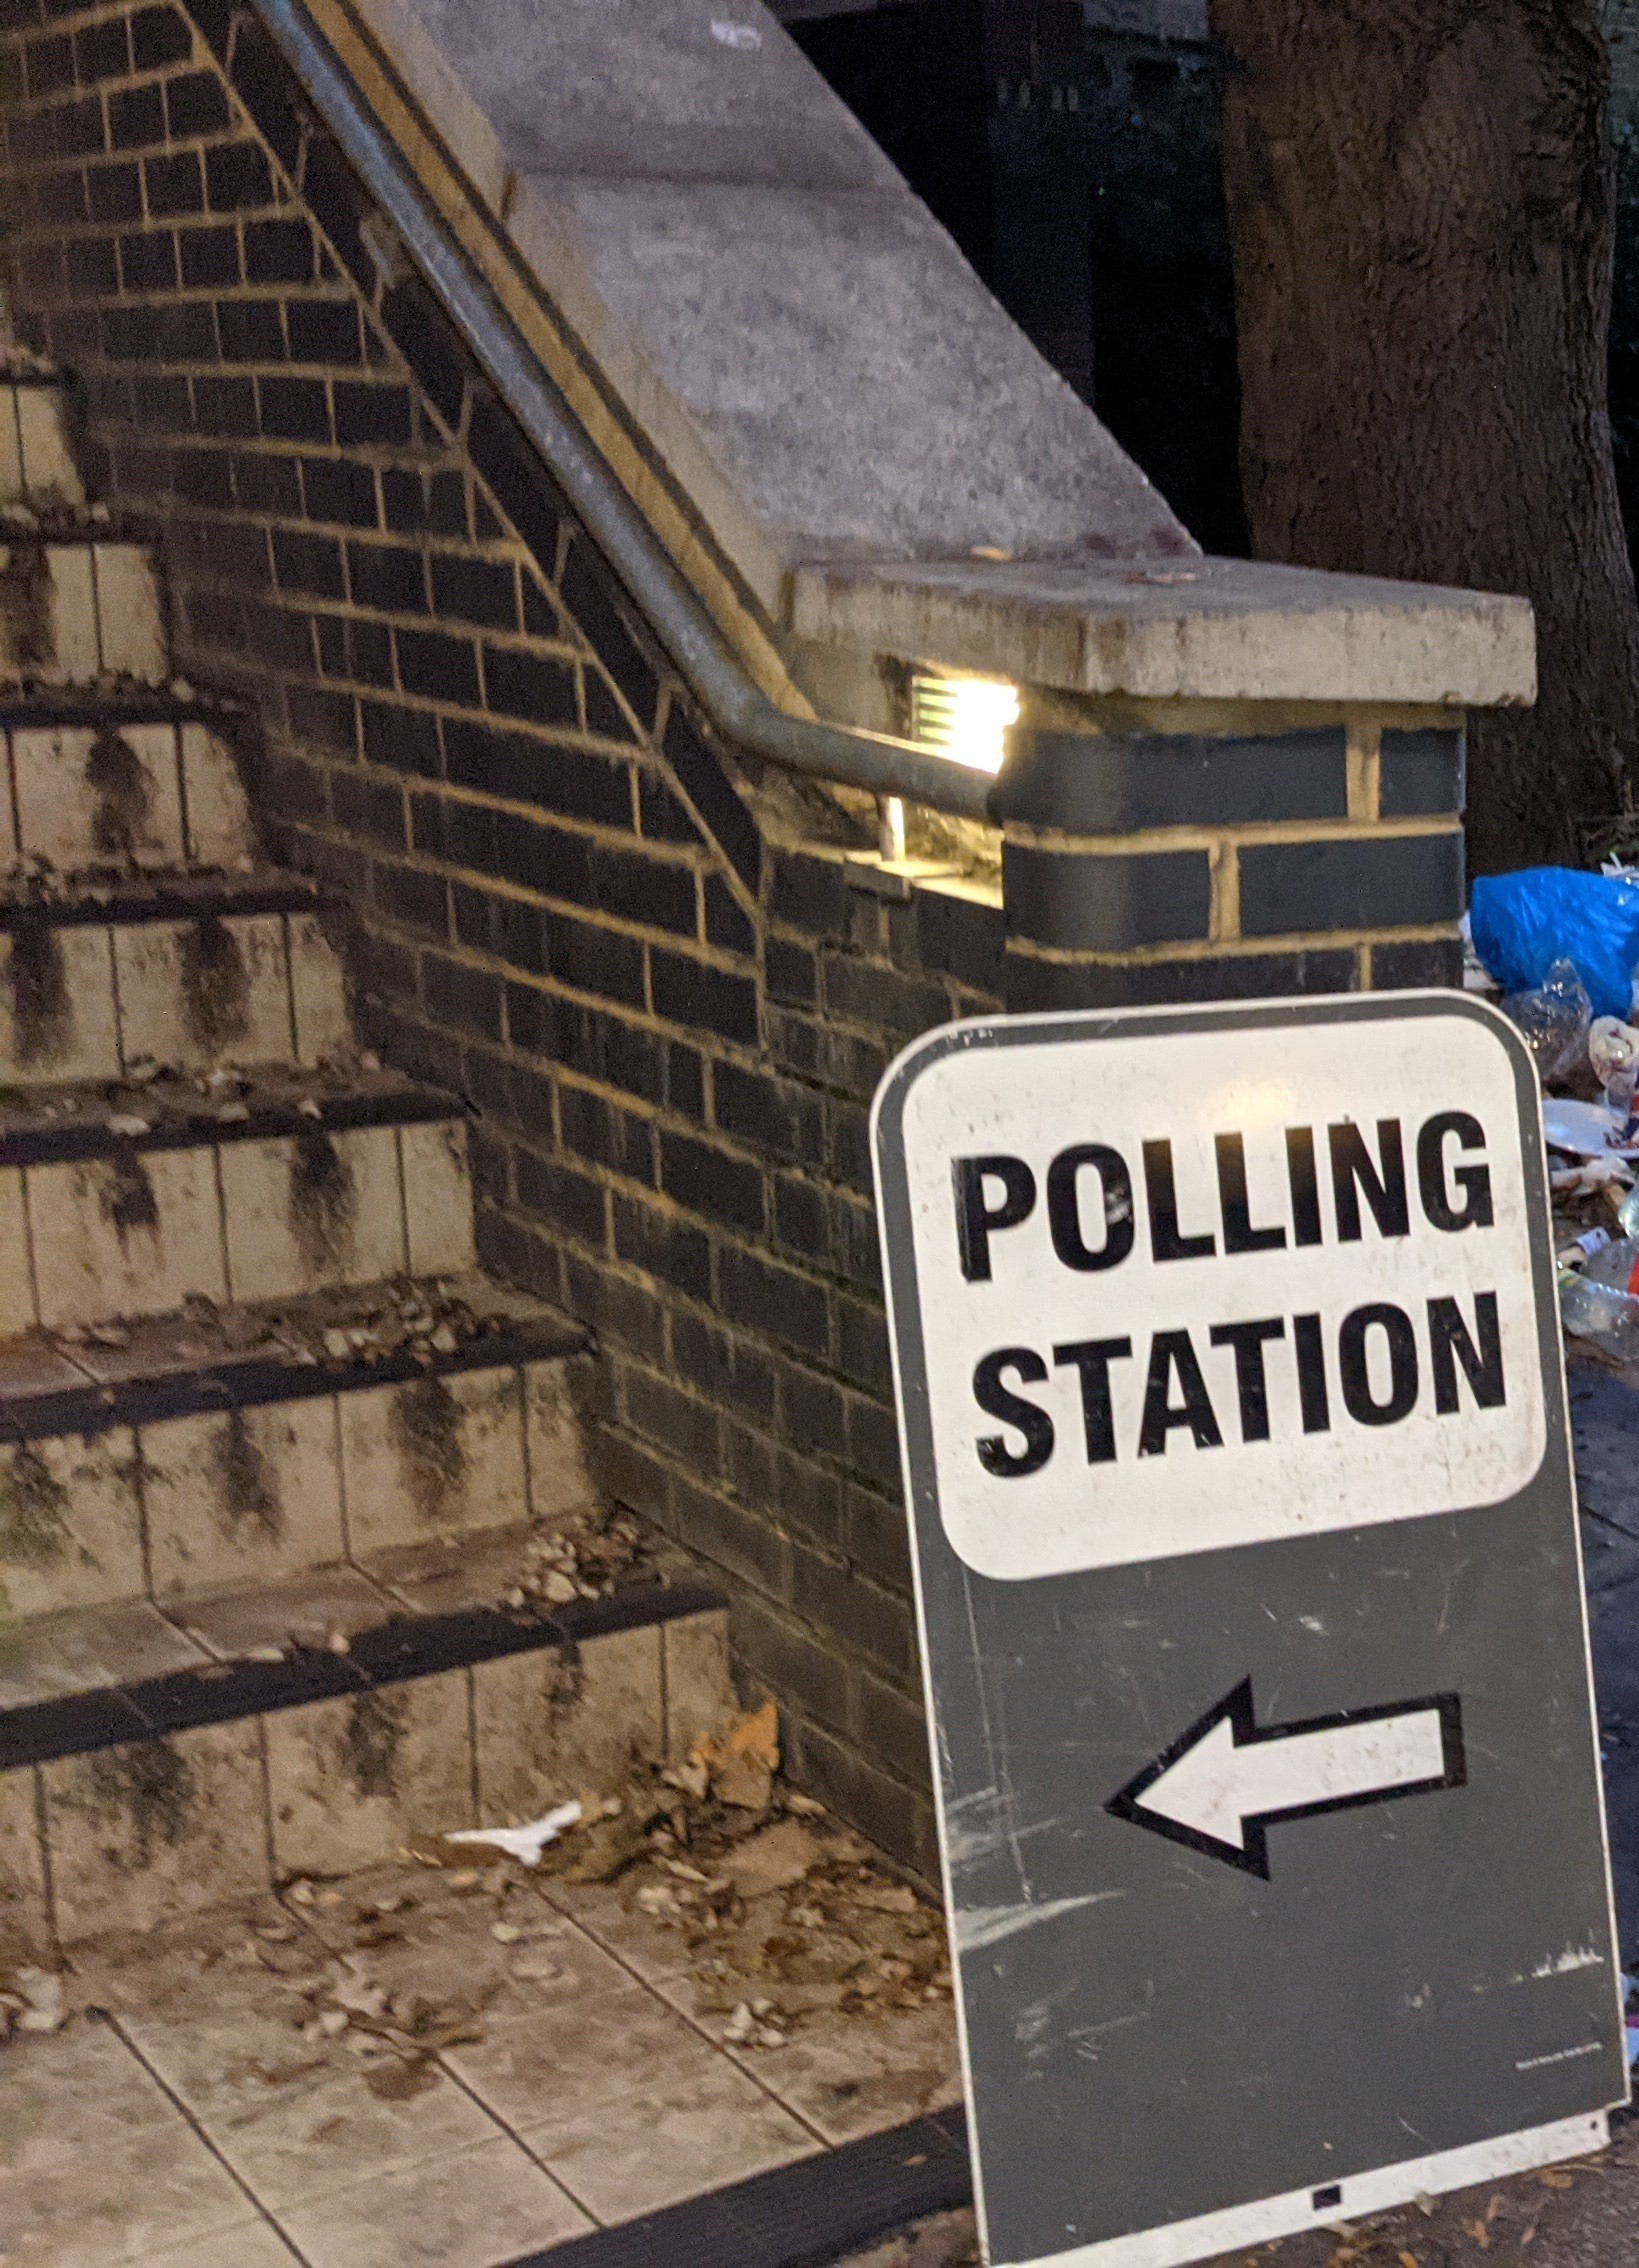 A polling station sign in Hackney. Photo: LDR Julia Gregory